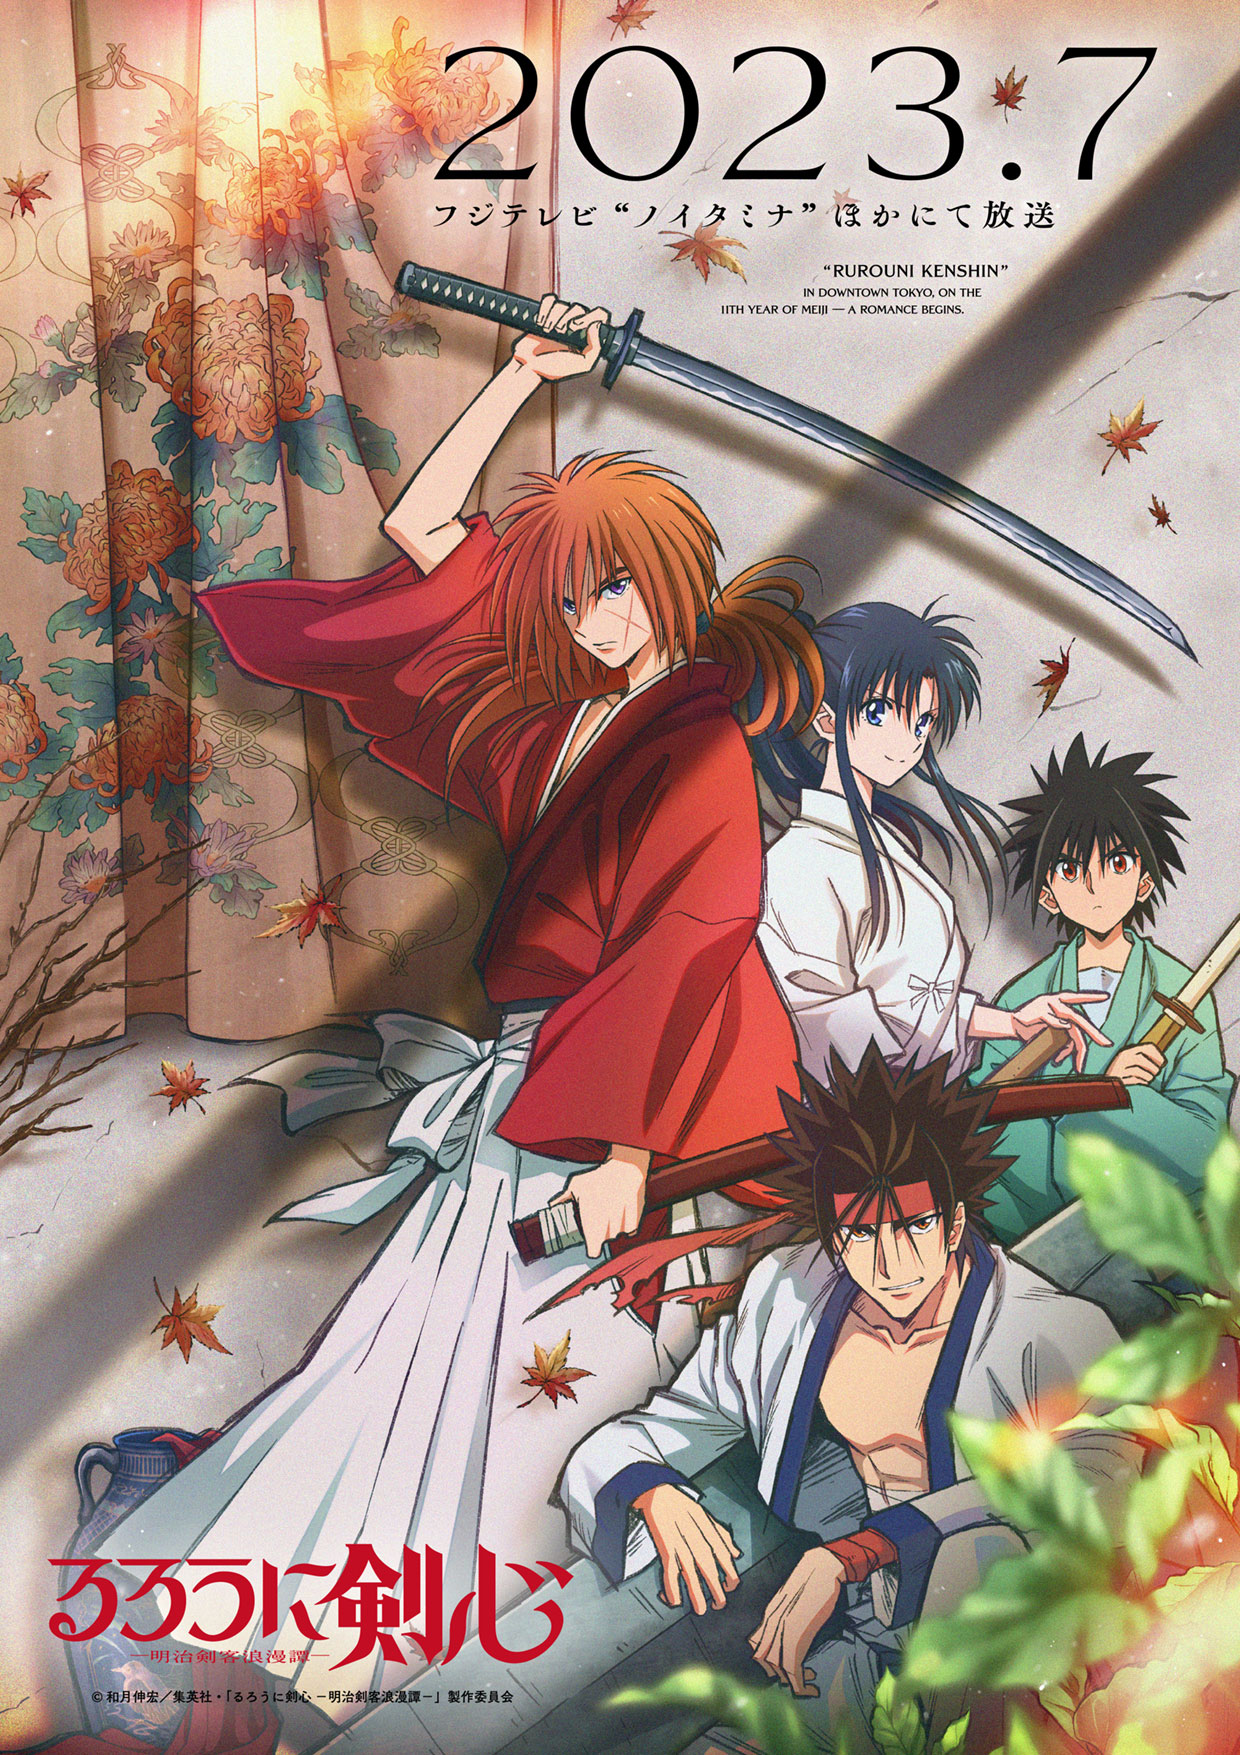 Rurouni Kenshin - Meiji Swordsman Romantic Story